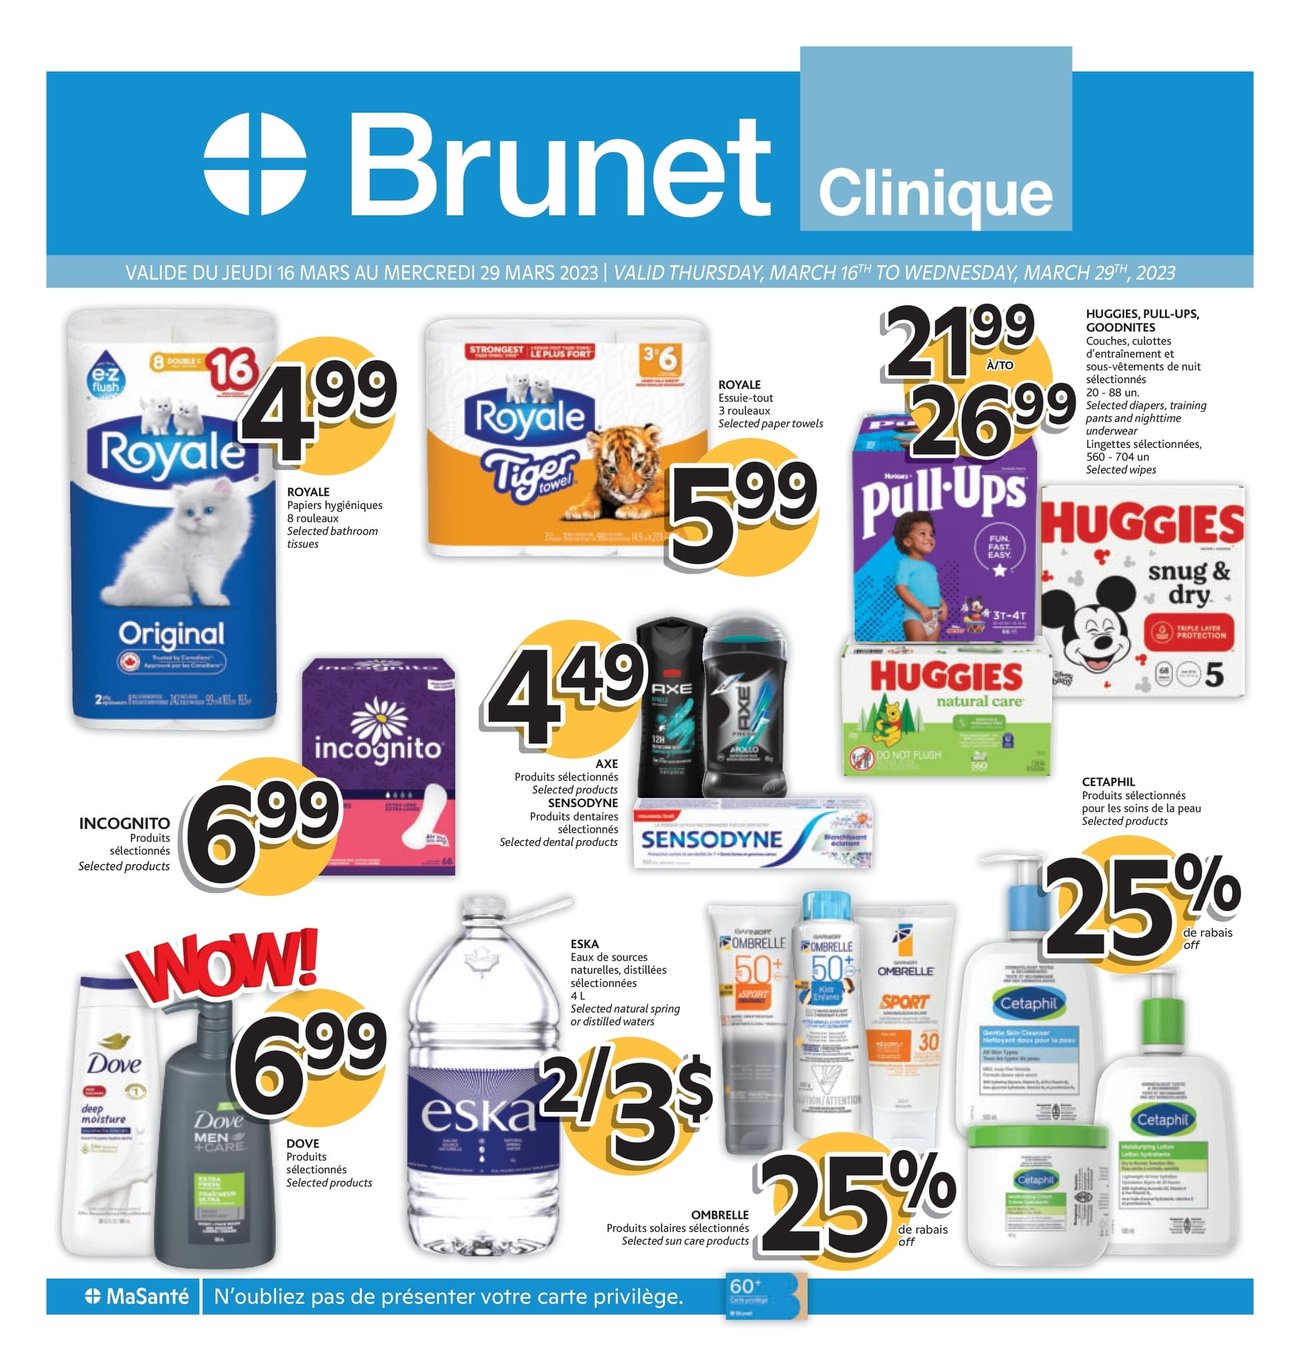 Brunet - Clinical - 2 Weeks of Savings - Page 1